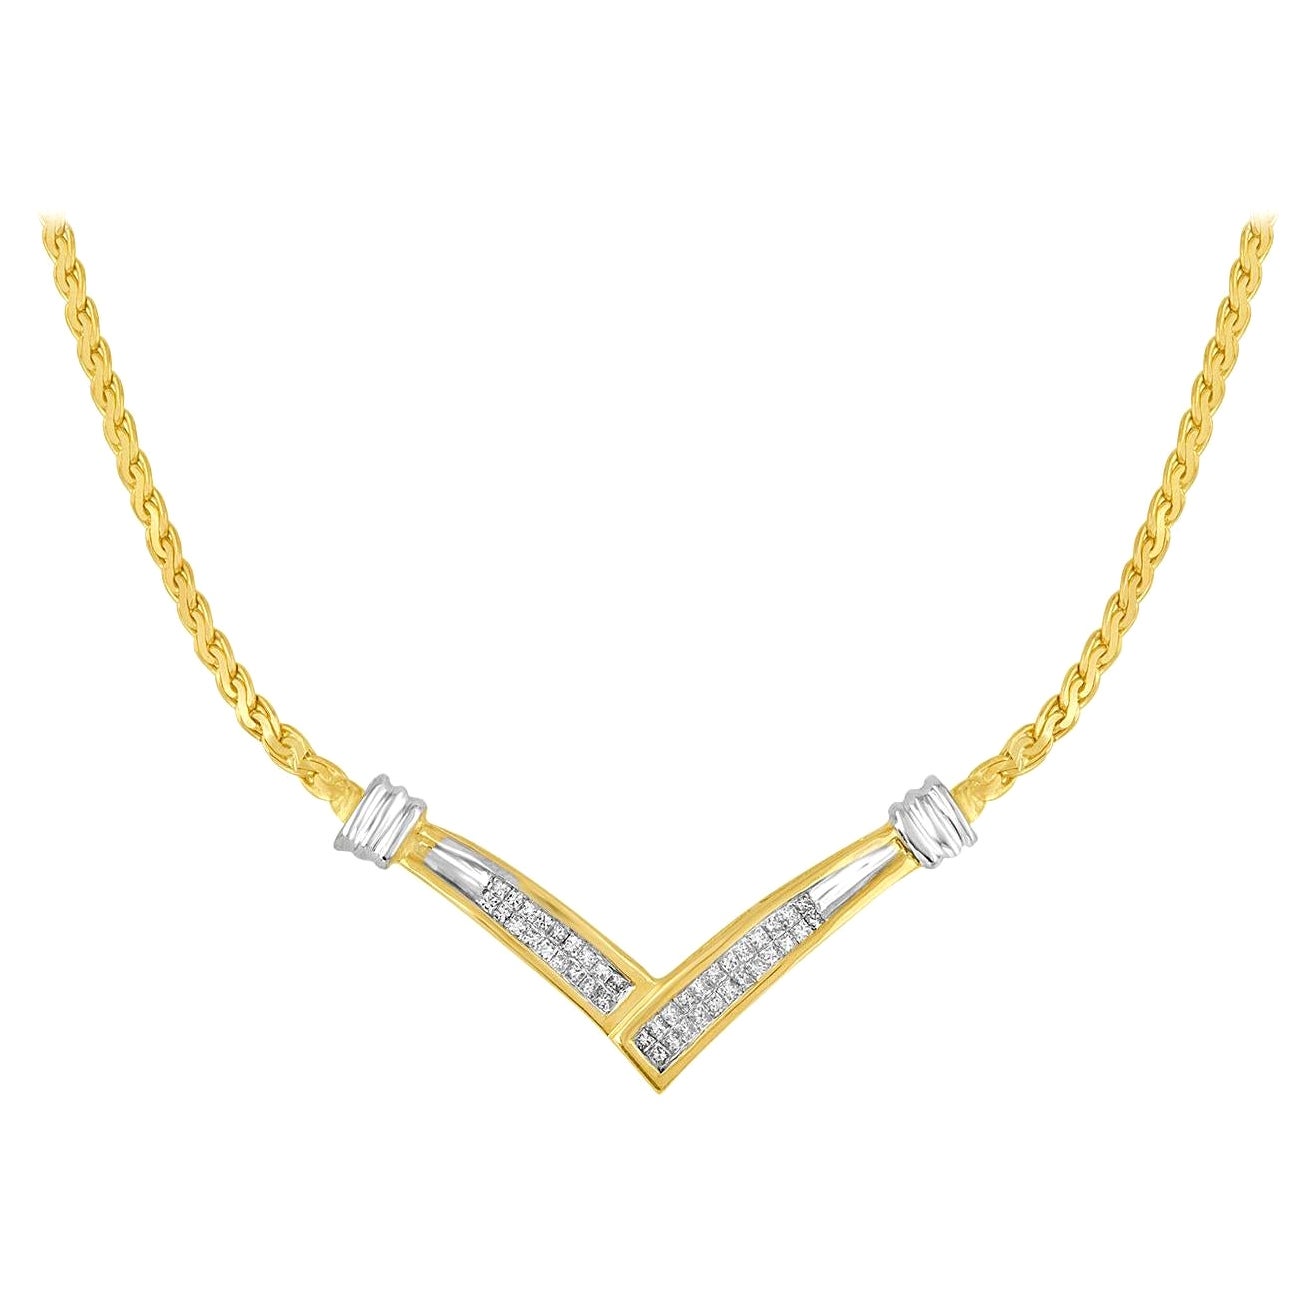 10k Yellow and White Gold 1/2 Carat Diamond "V" Shape Necklace